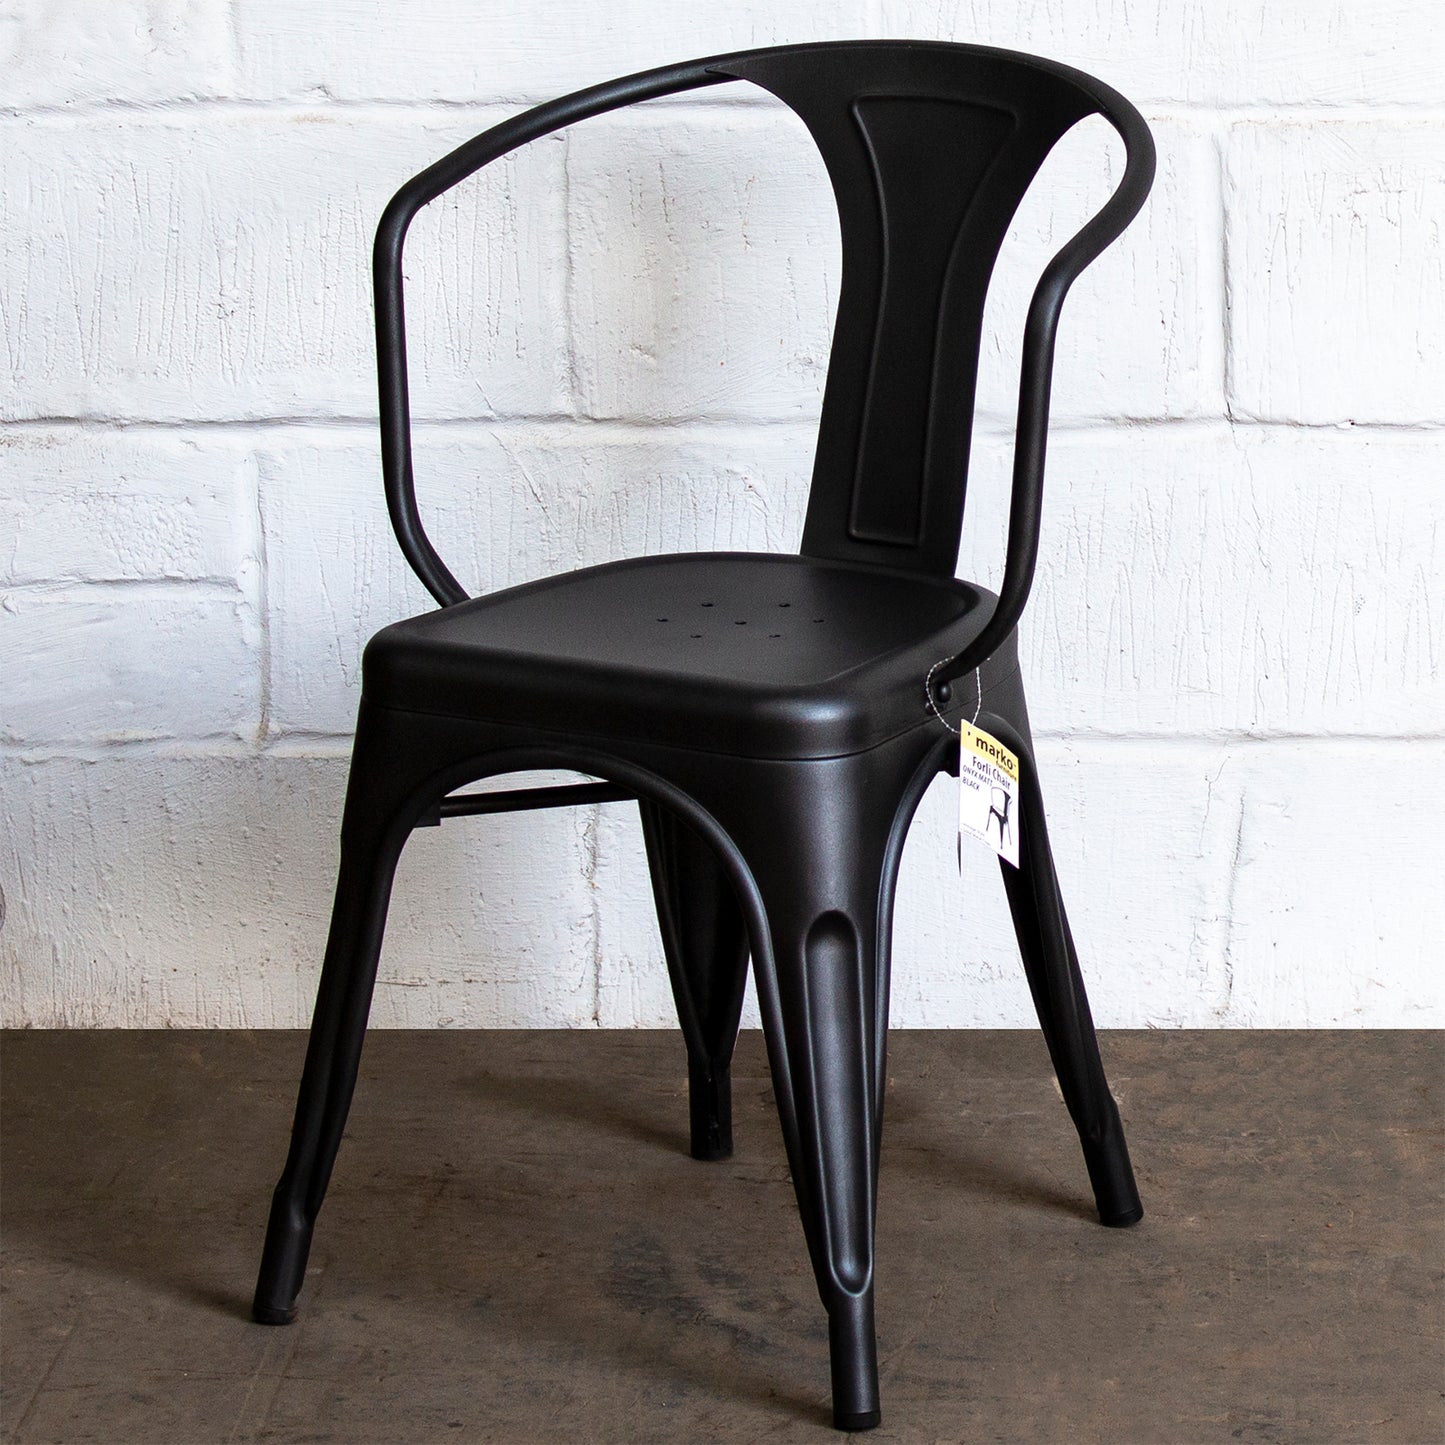 7PC Taranto Table & 6 Forli Chairs Set - Onyx Matt Black